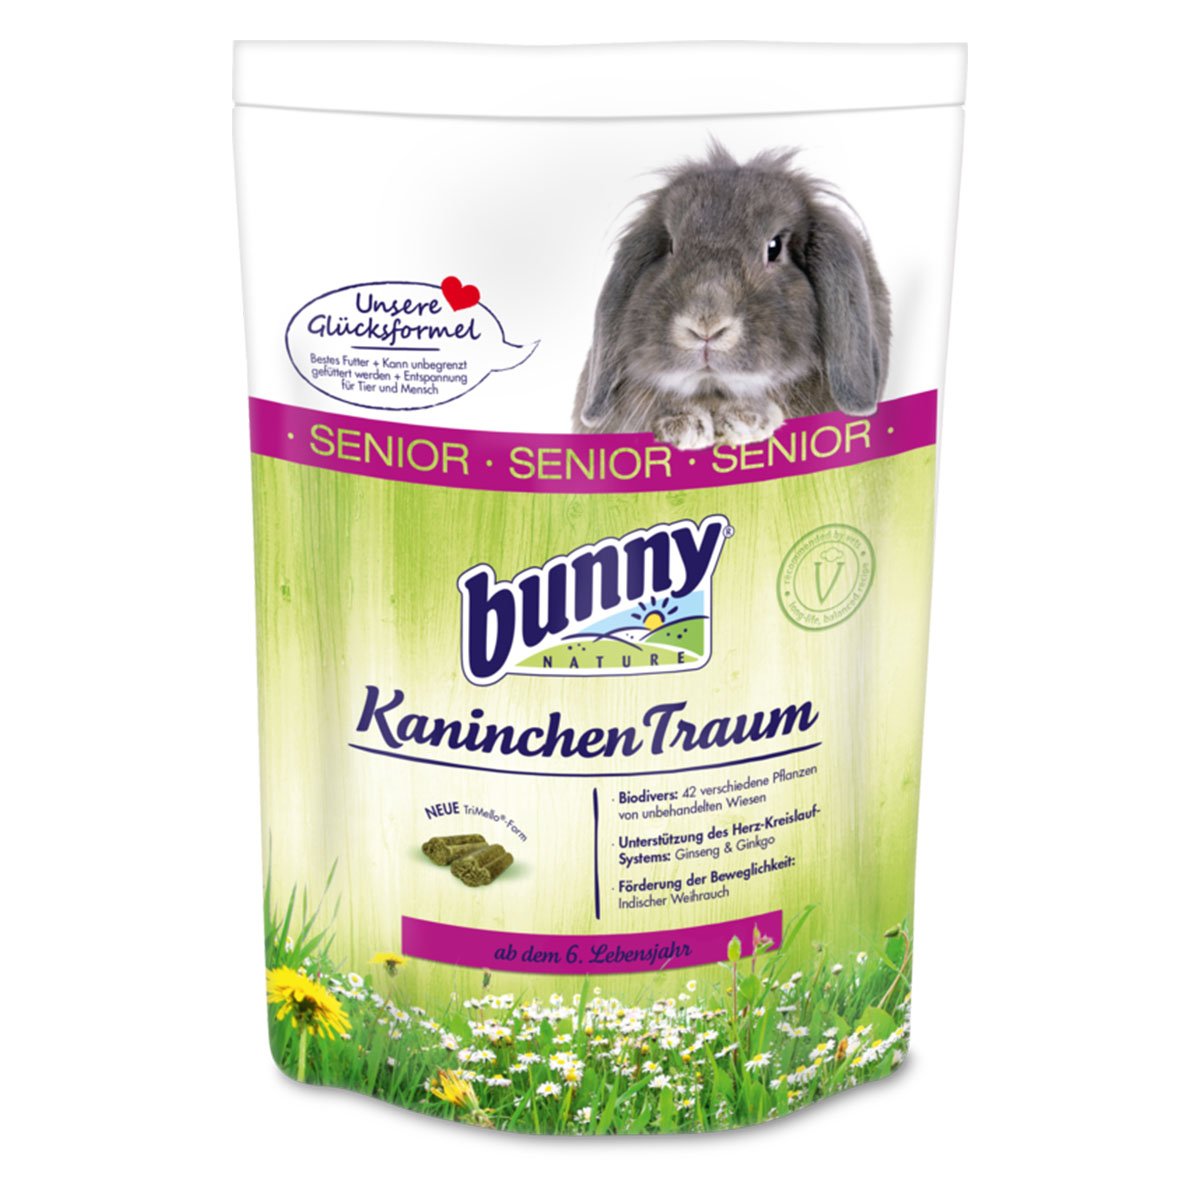 Bunny KaninchenTraum senior 1,5kg von bunny